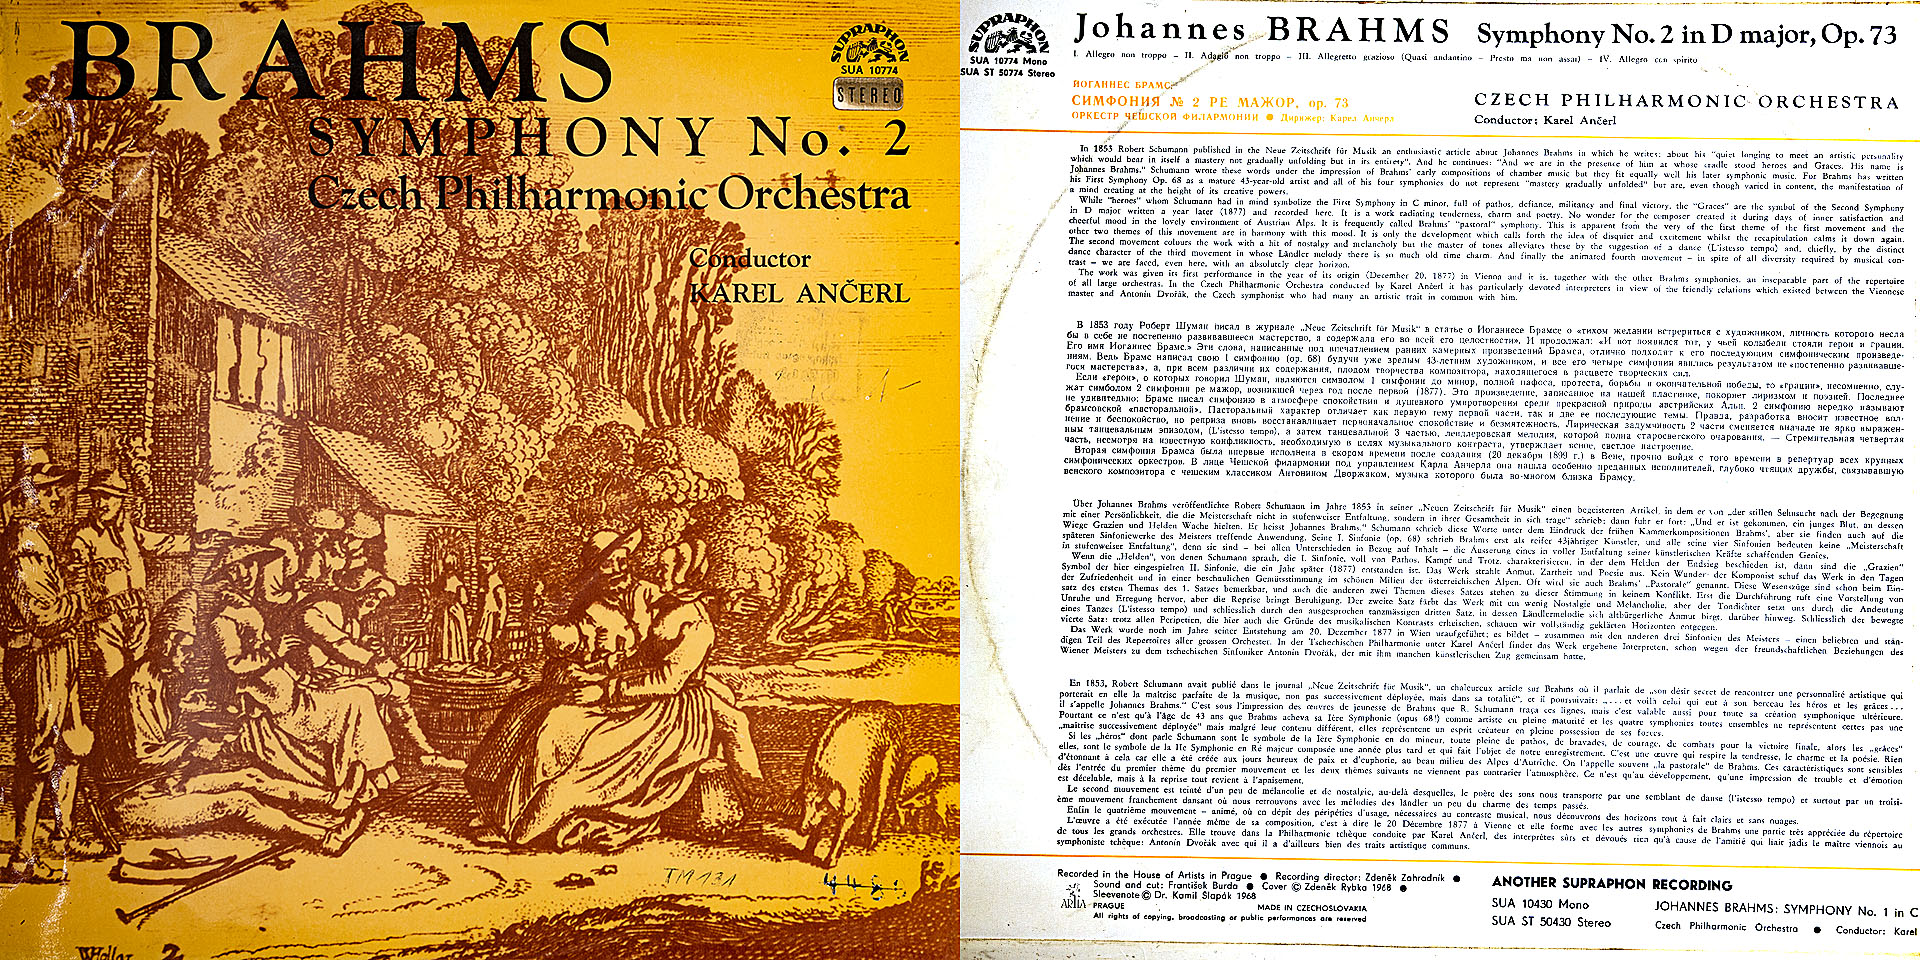 Brahms -  Symphony No. 2 - Czech Philharmonic Orchersta, Dirigent  Karel Ancerl